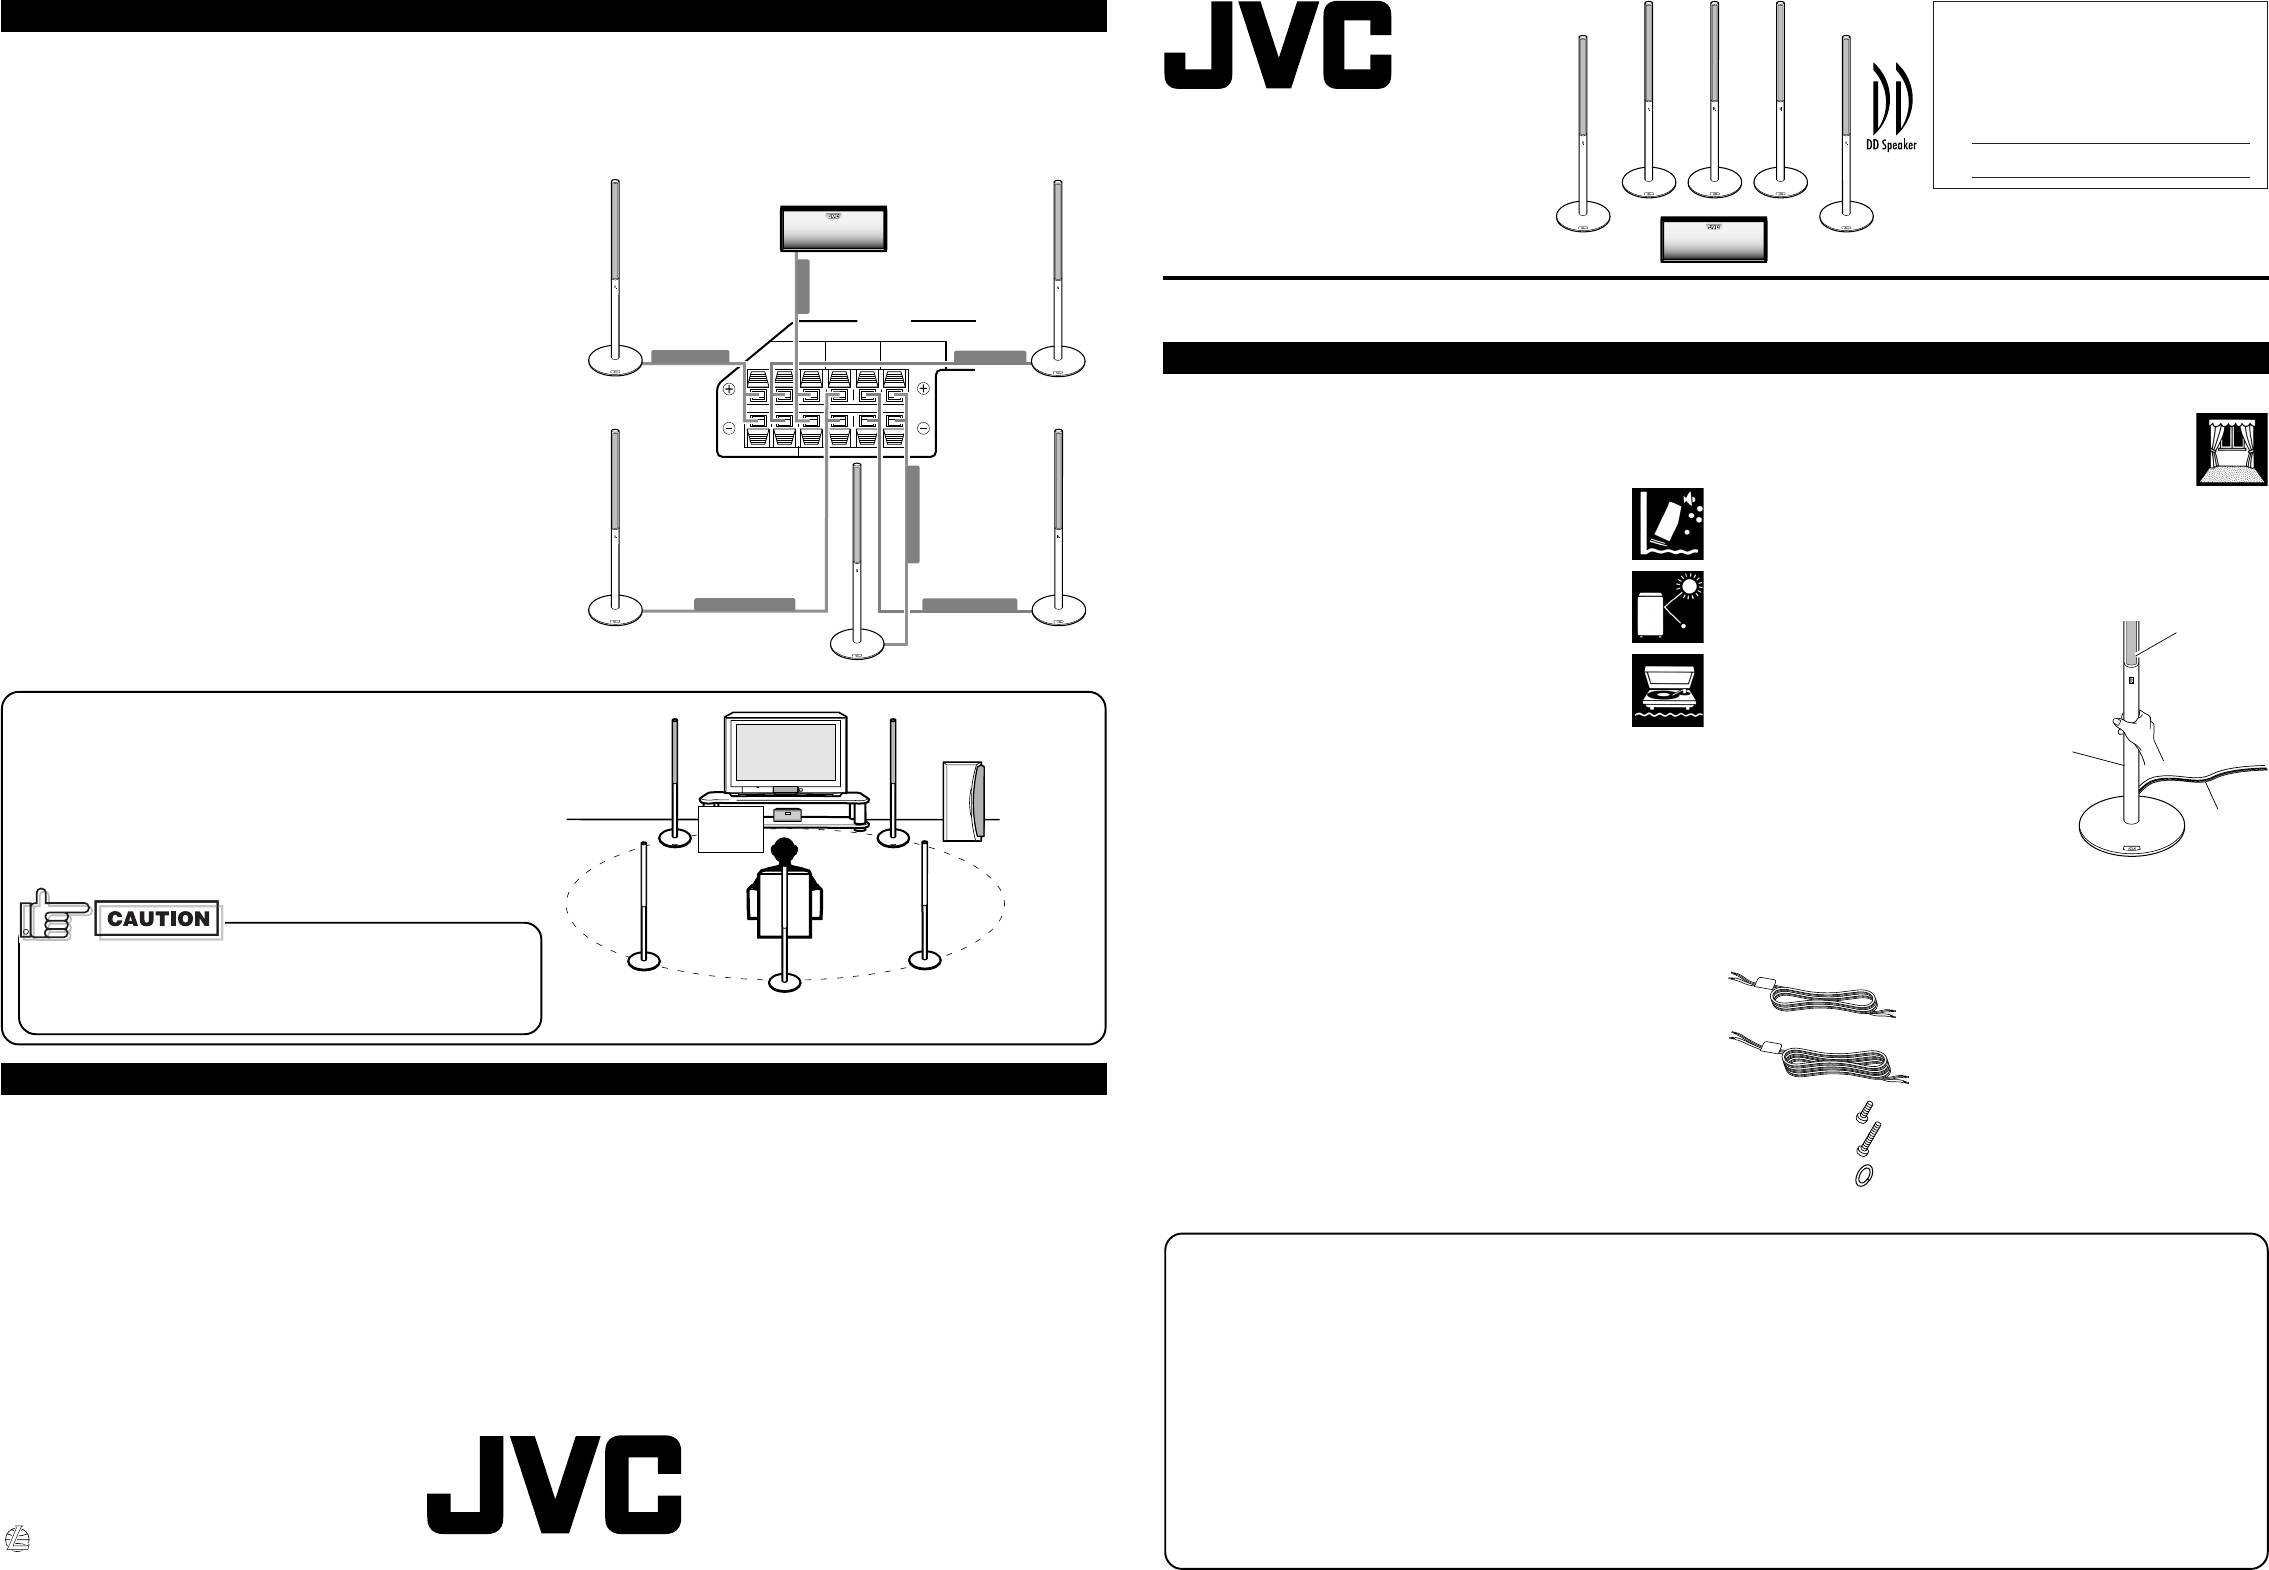 JVC SX-XD55 (XD55C)